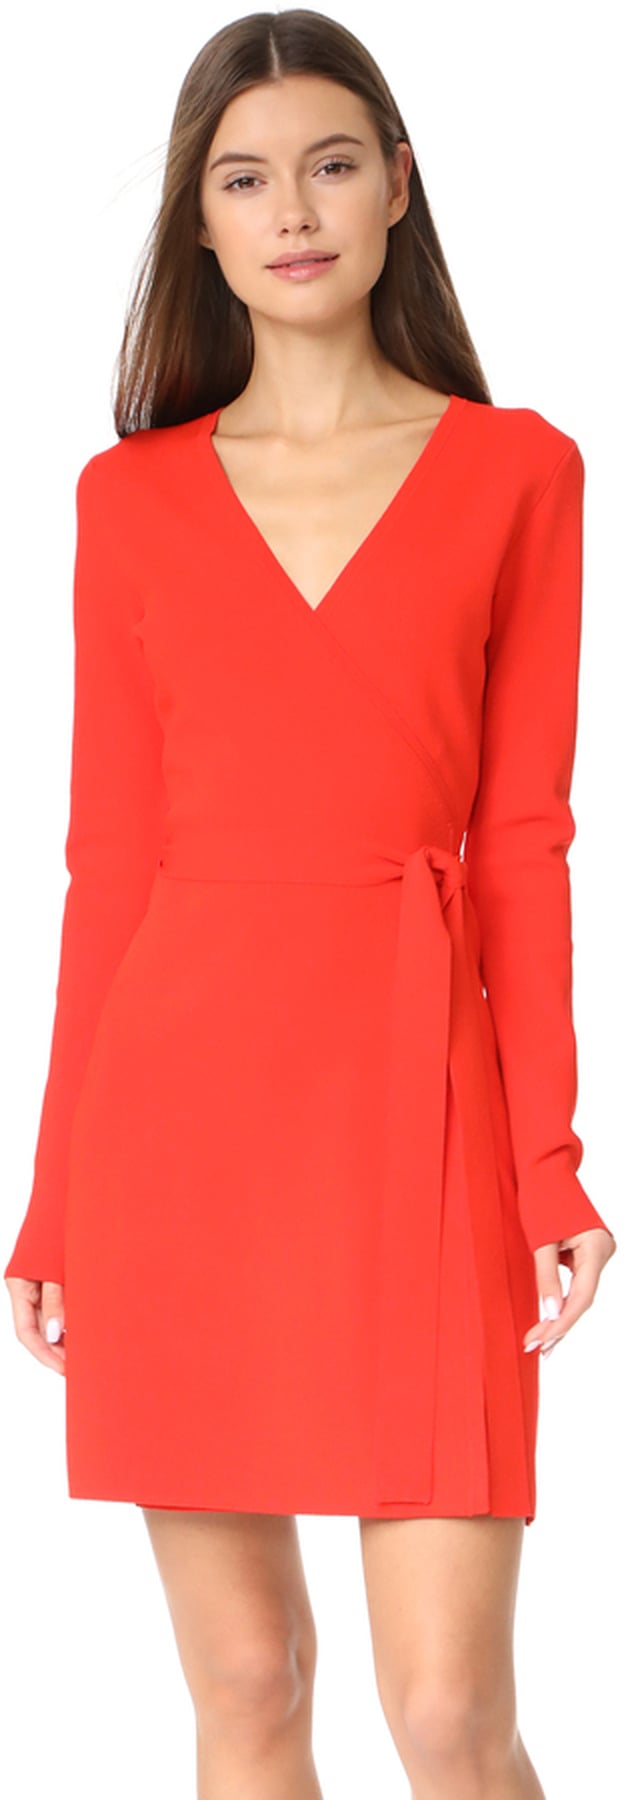 Selena Gomez Wearing Red Rouje Dress | POPSUGAR Fashion